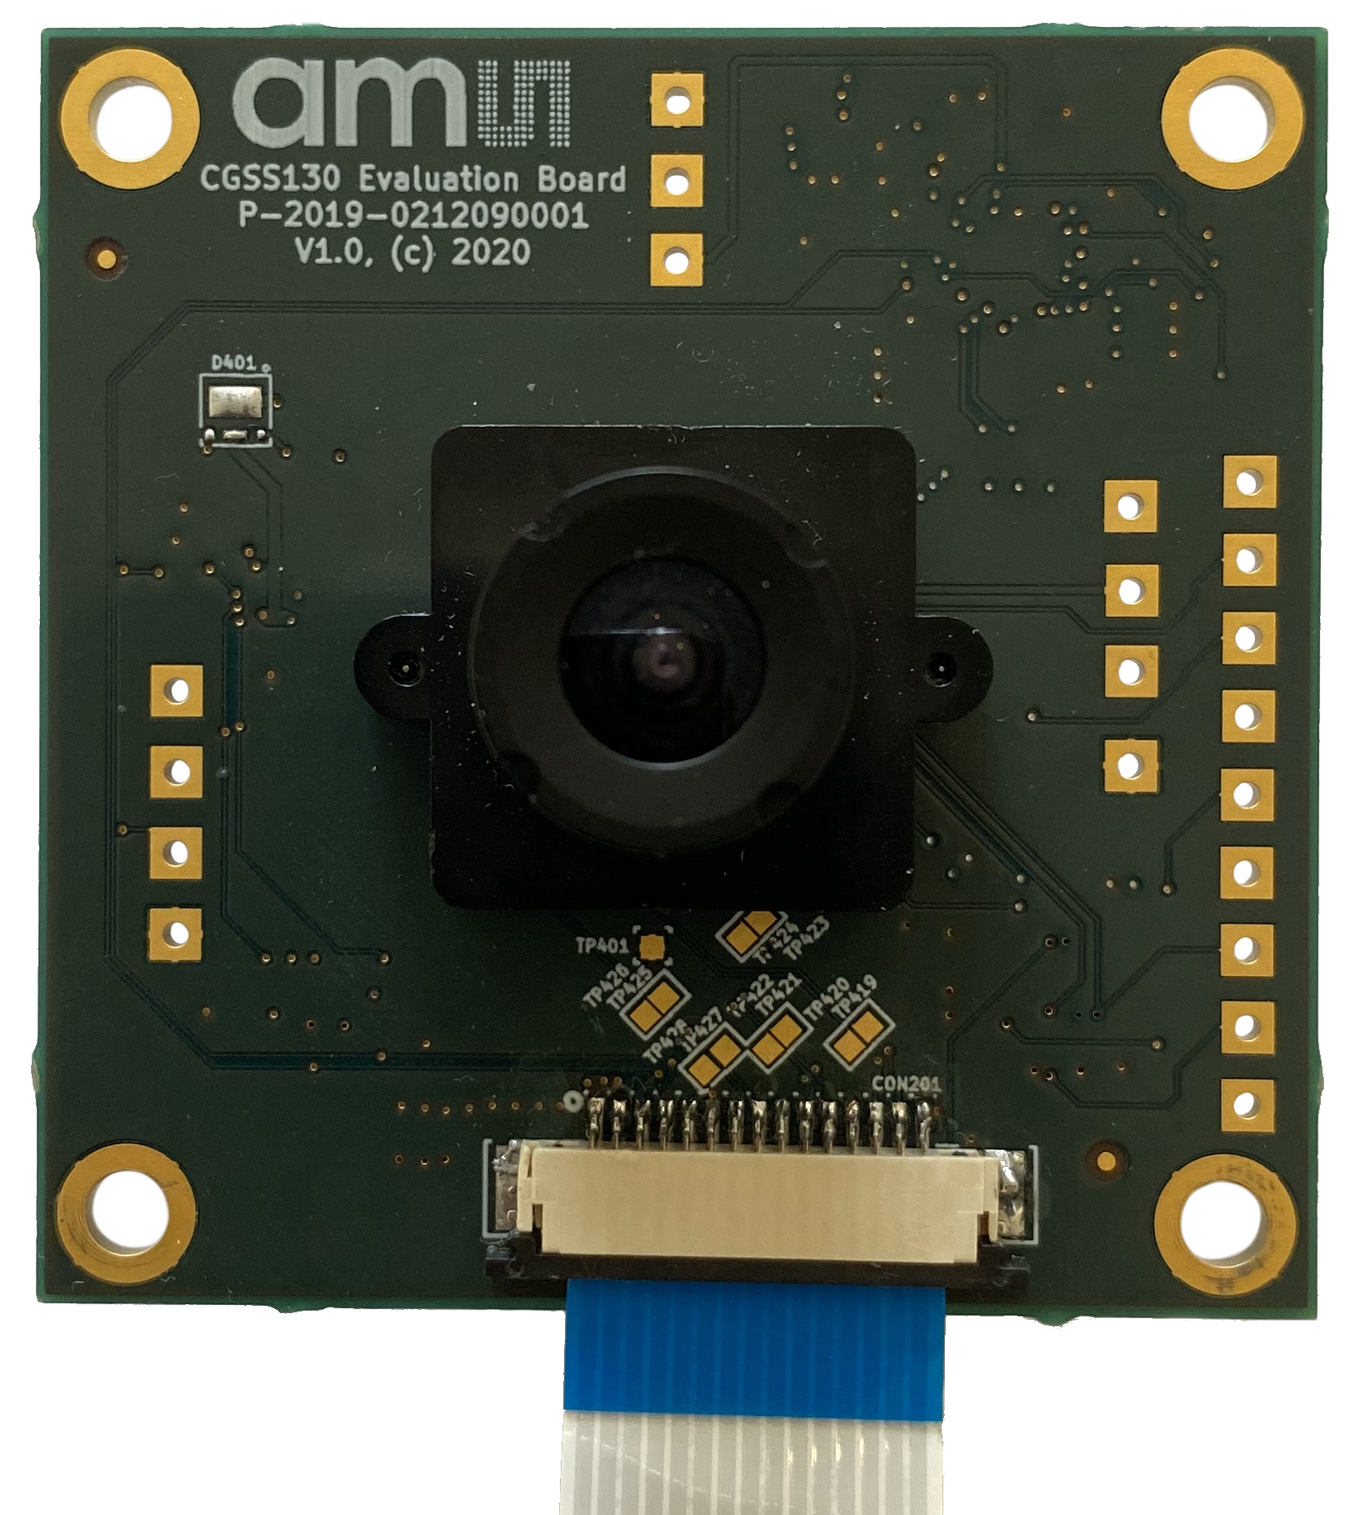 Mira130 Sensor board image